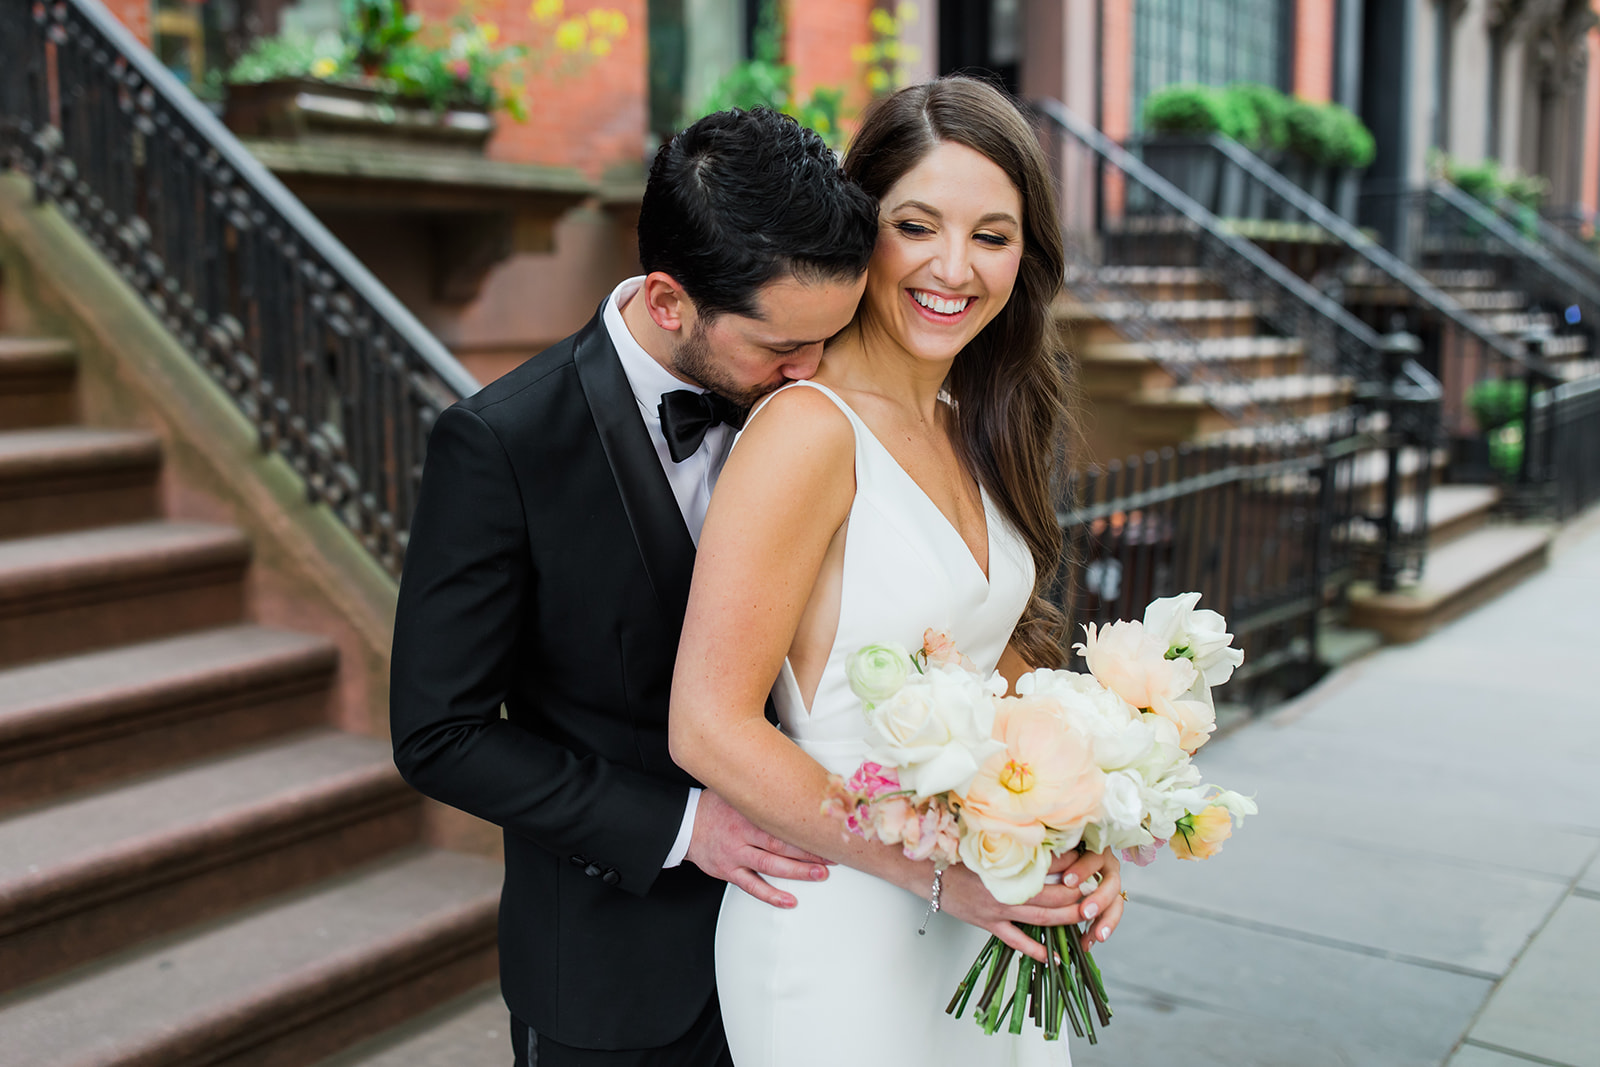 Brooklyn Bridge Park Wedding - Larisa Shorina Photography - New York, Paris, Italy and Destination Wedding Photographer